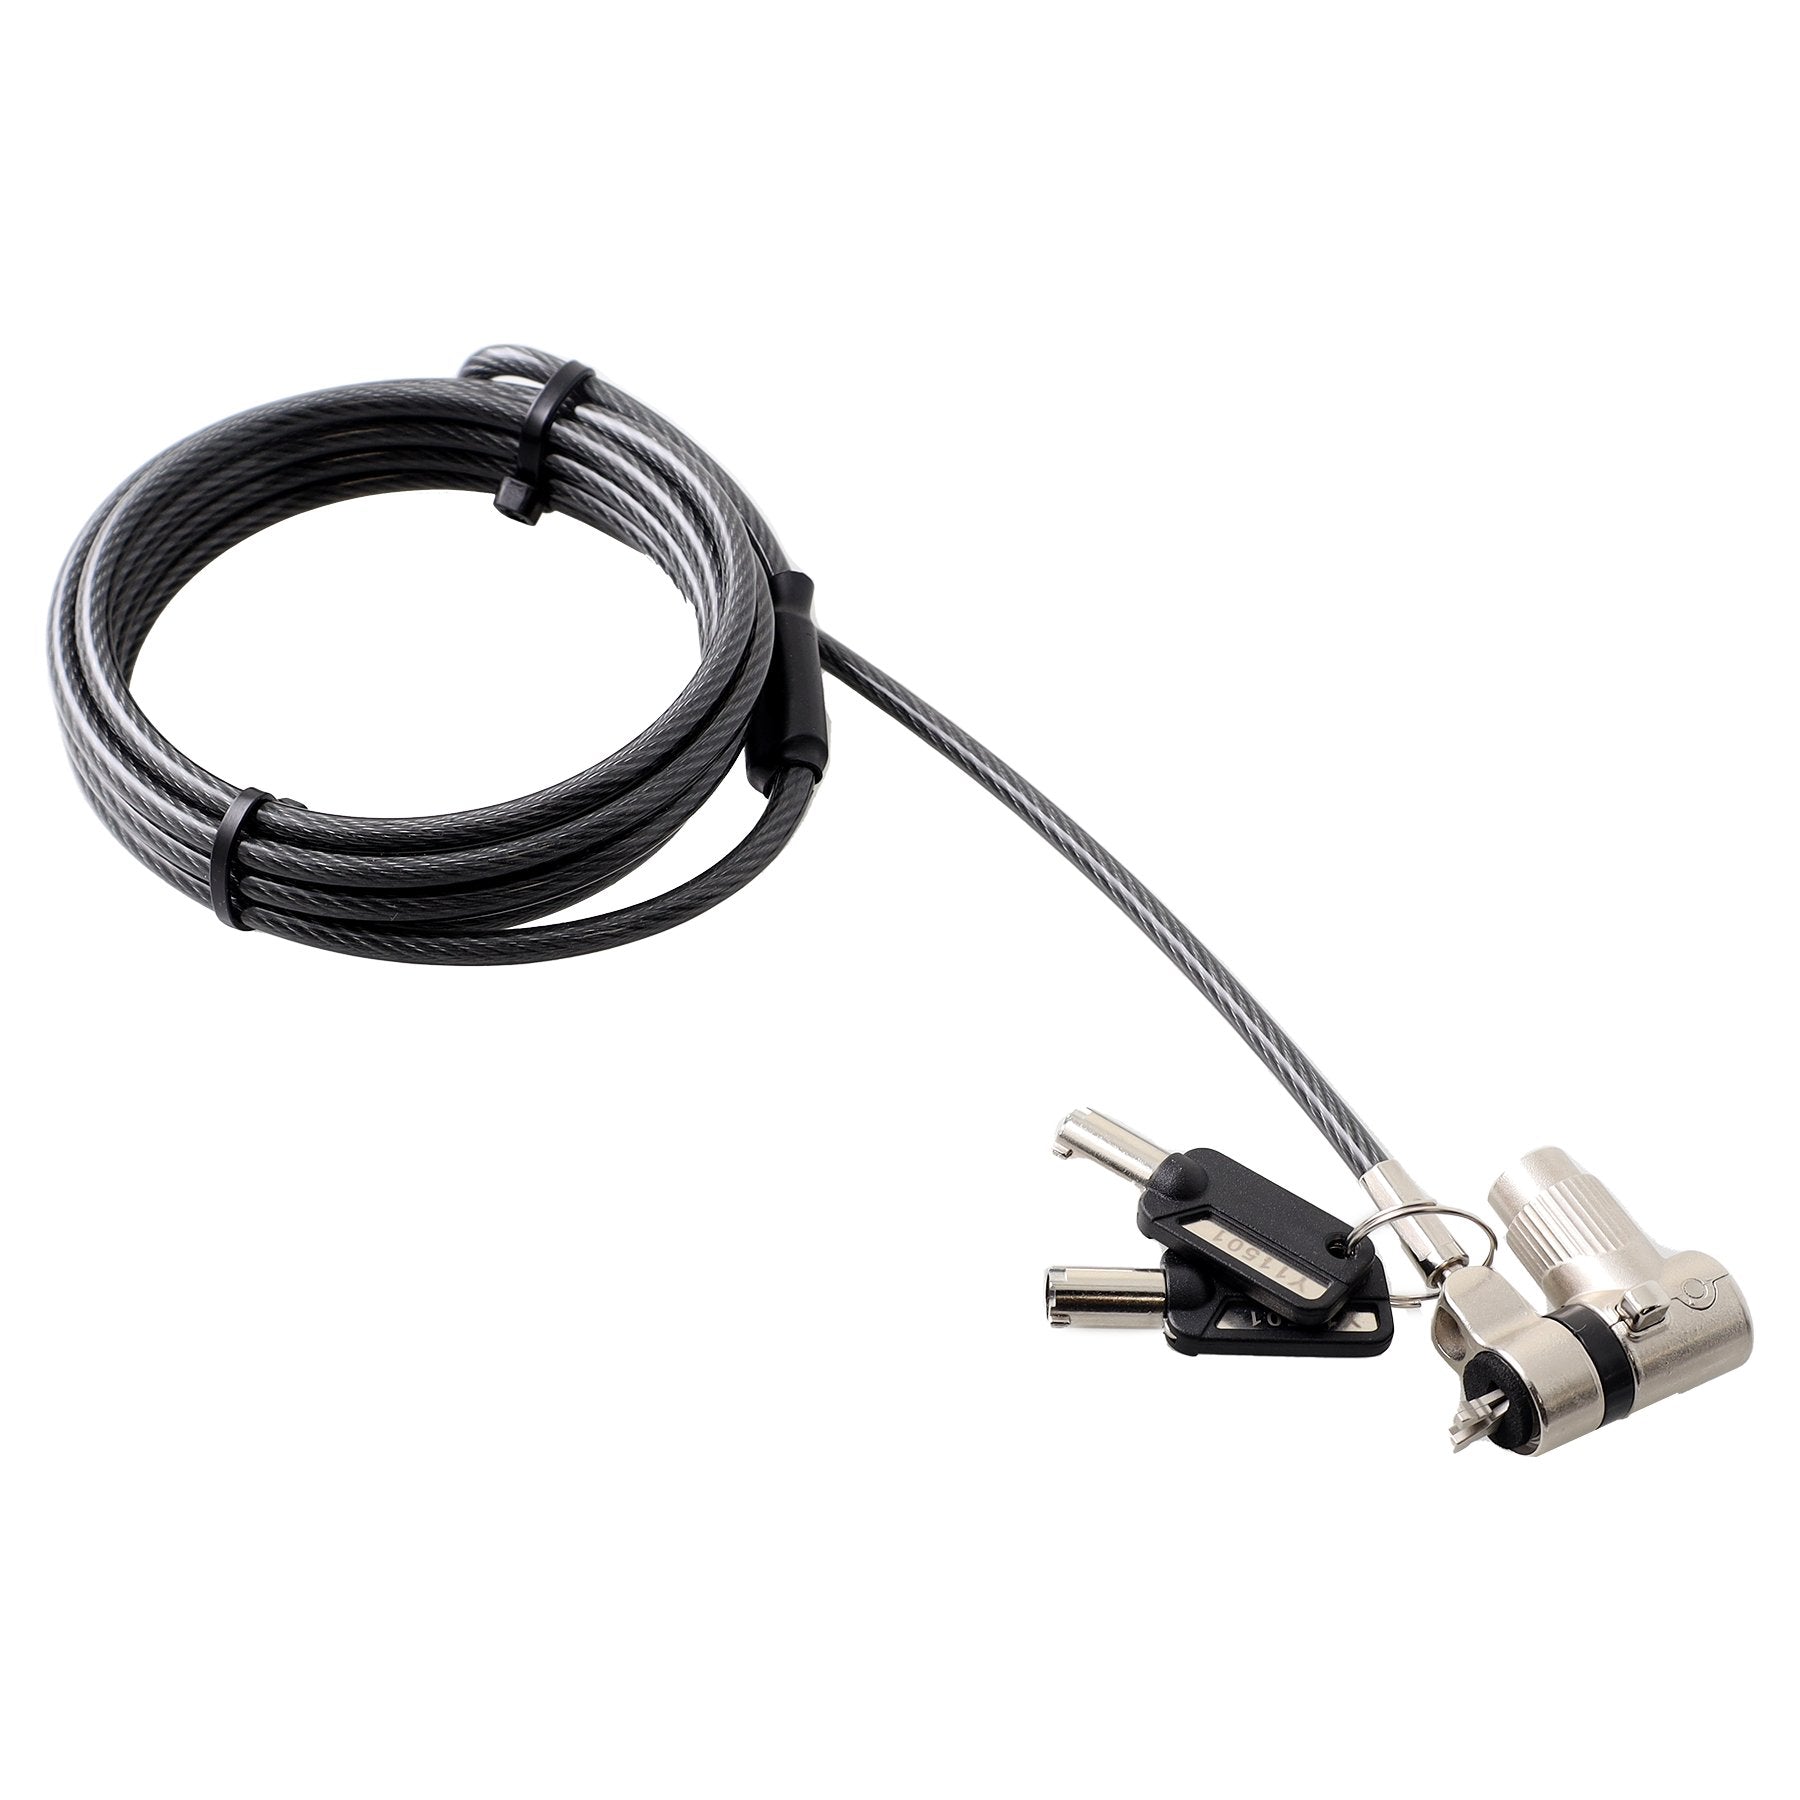 Codi Universal 3-in-1 Key Cable Lock (KL2090)